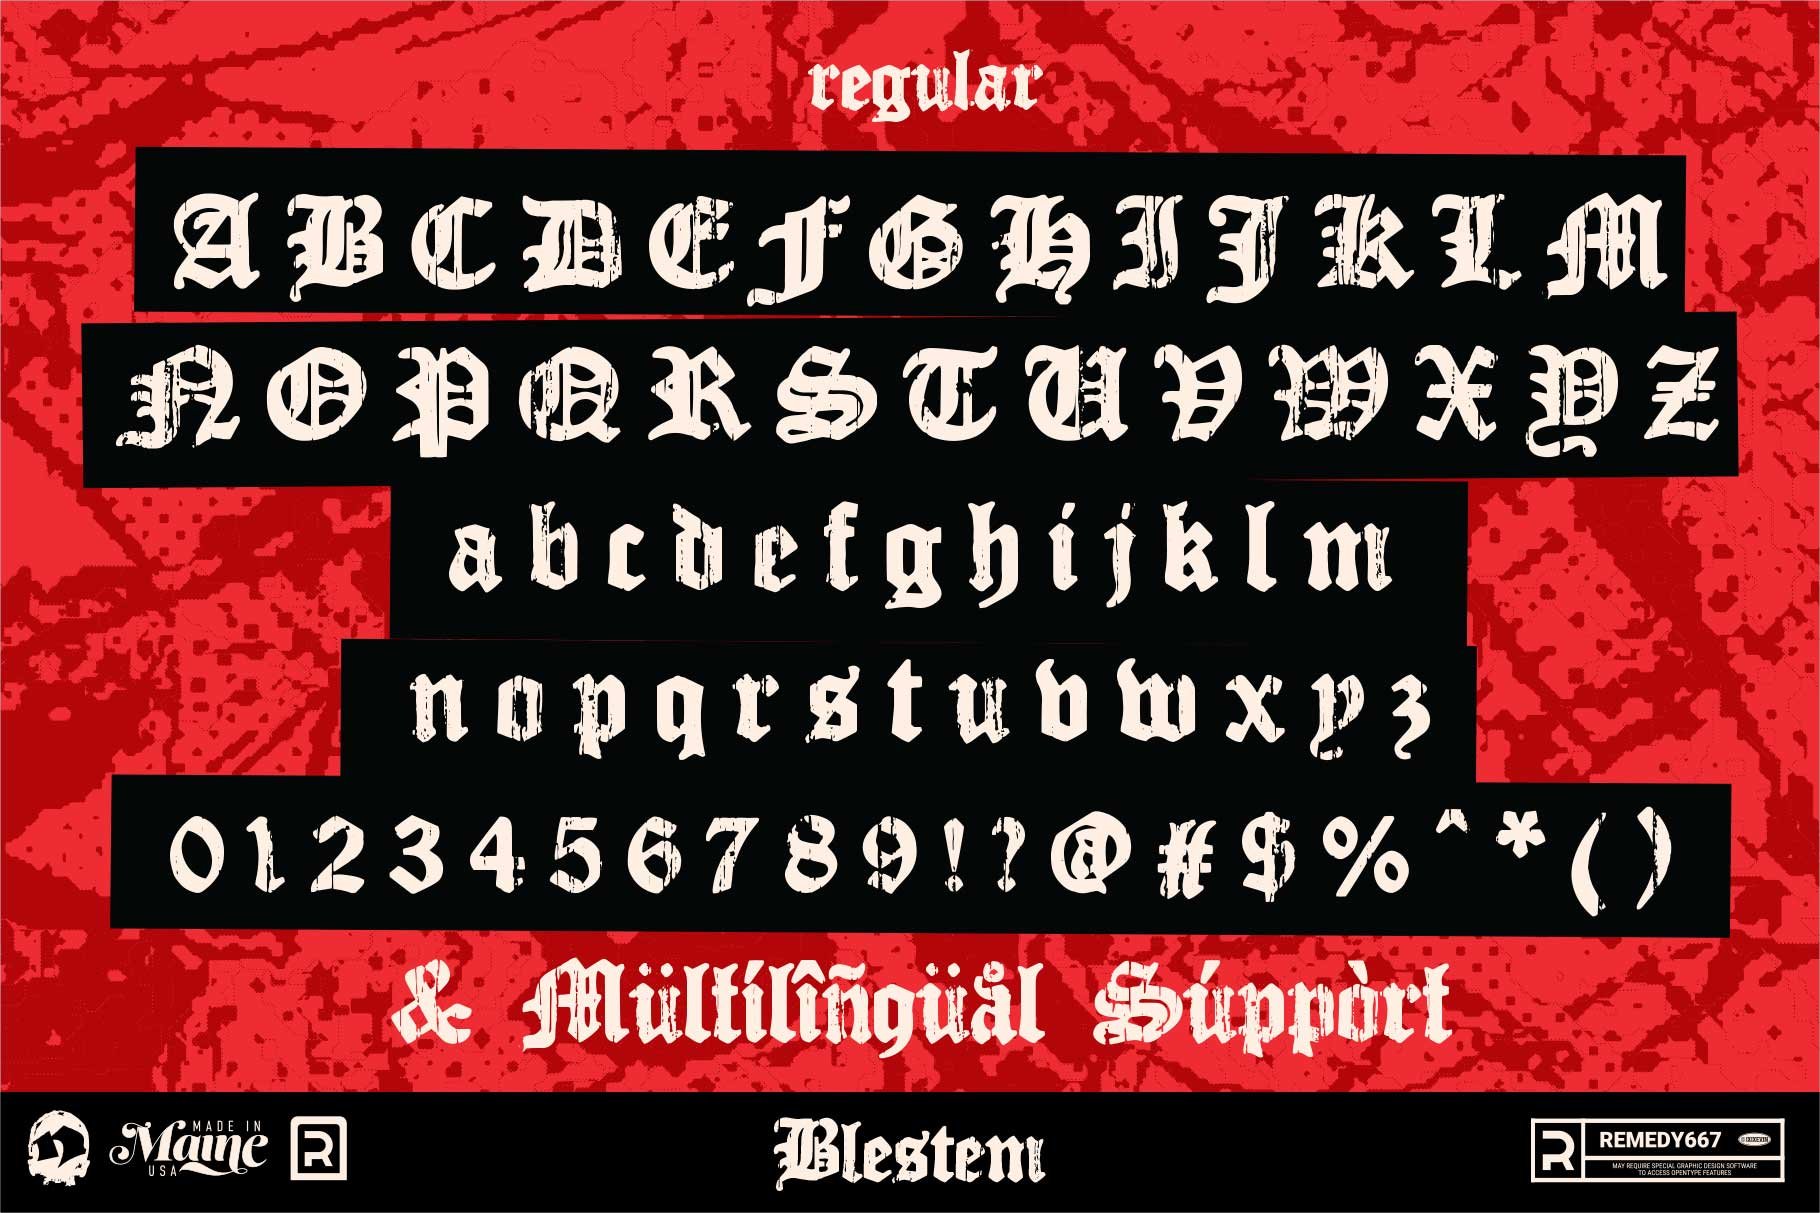 Blestem – Gothic Horror Typeface preview image.